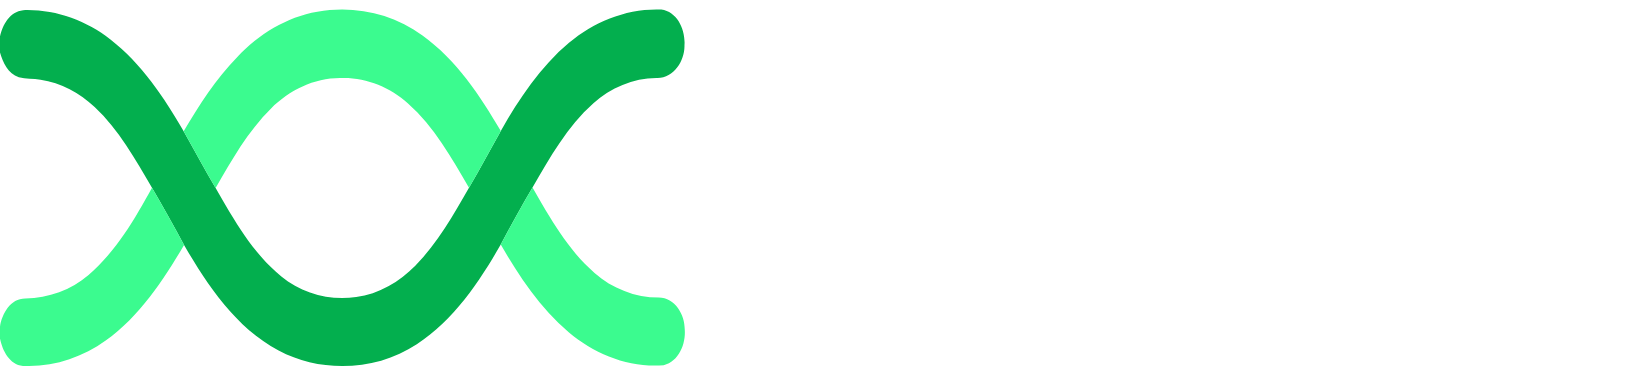 Archaea Energy Logo groß für dunkle Hintergründe (transparentes PNG)